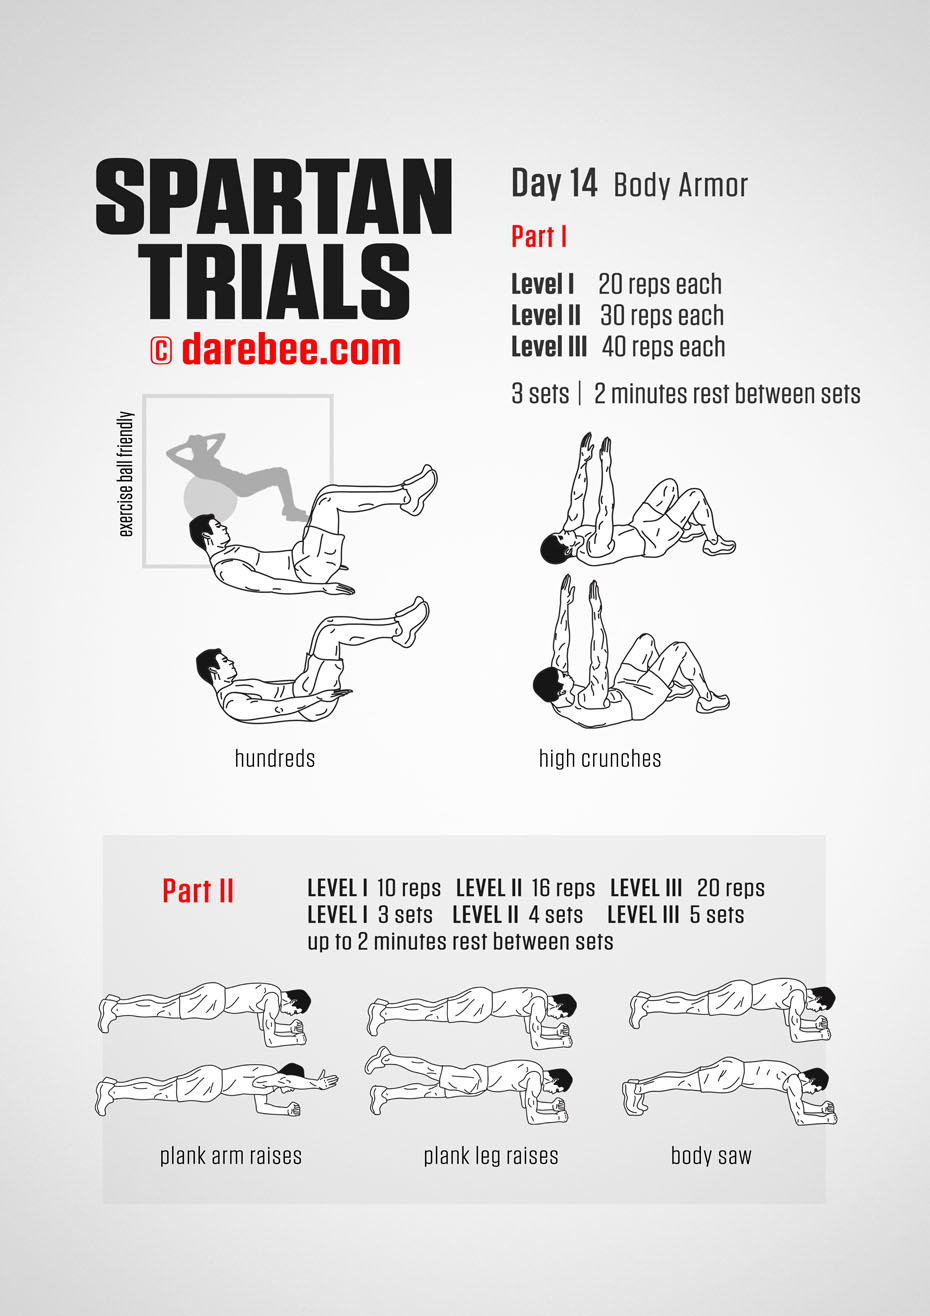 Spartan Trials: 30-Day Fitness Program